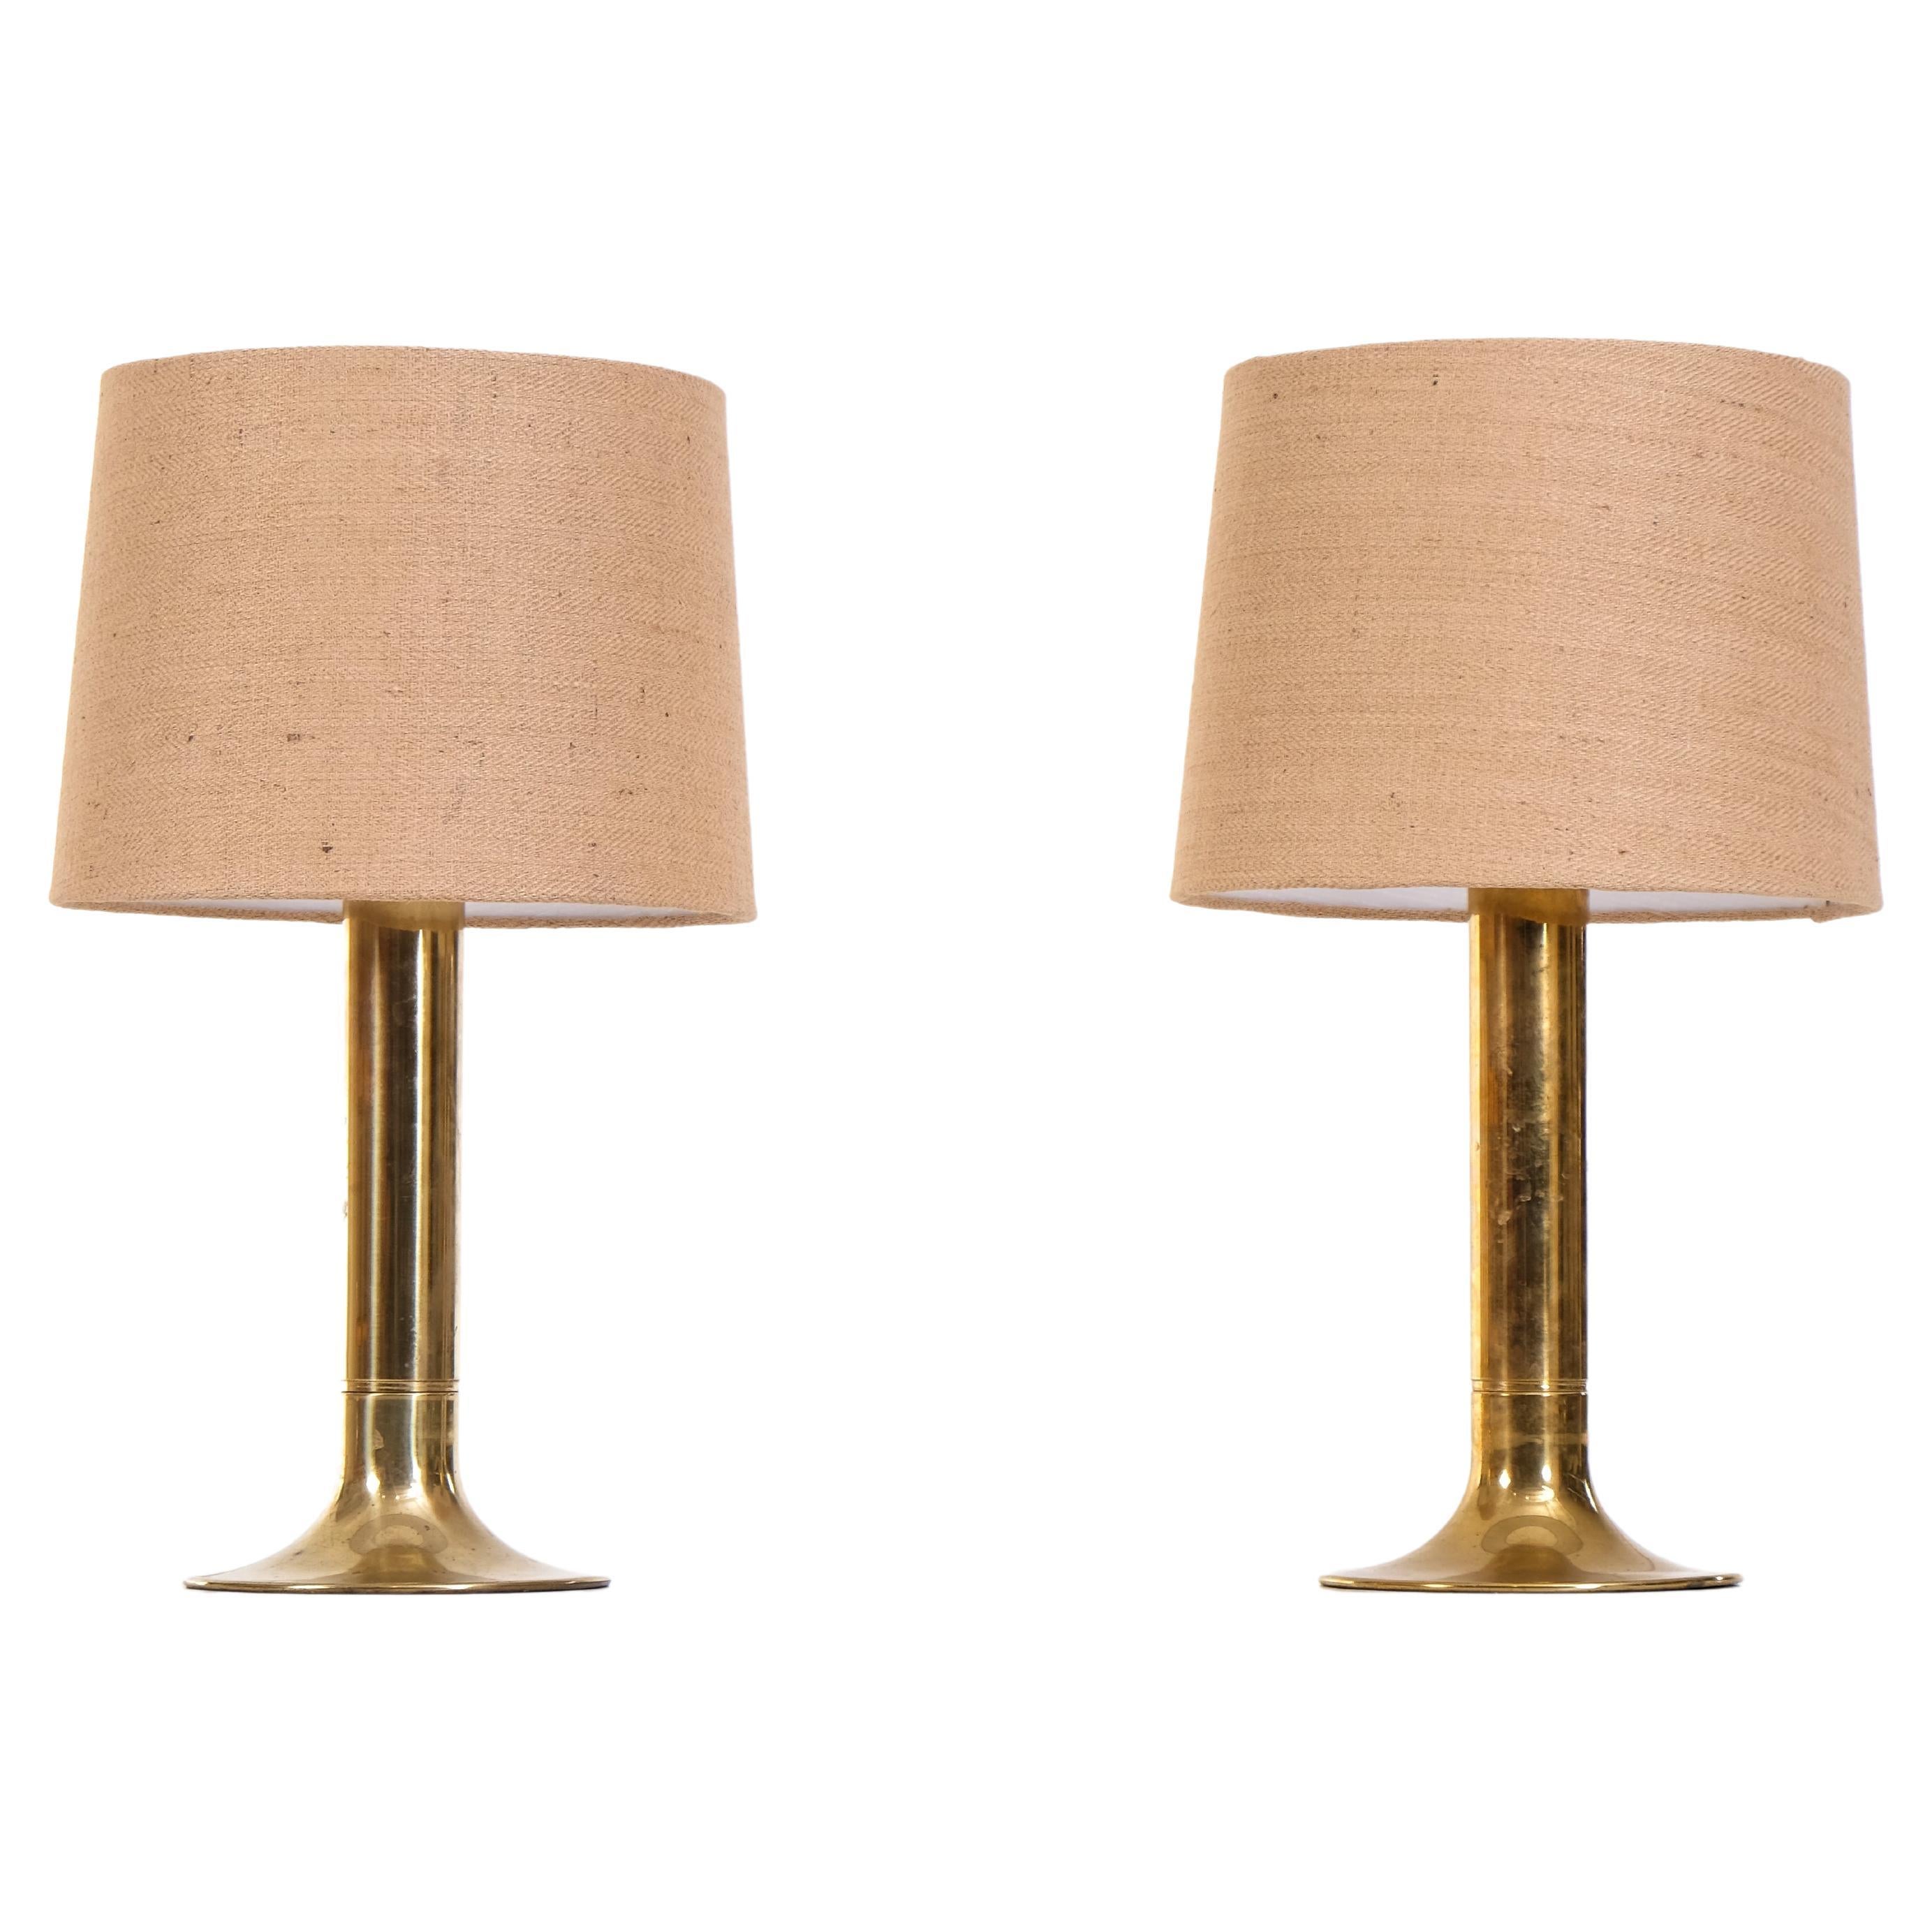 Pair of Hans-Agne Jakobsson Brass Table Lamps model B204, 1970s For Sale